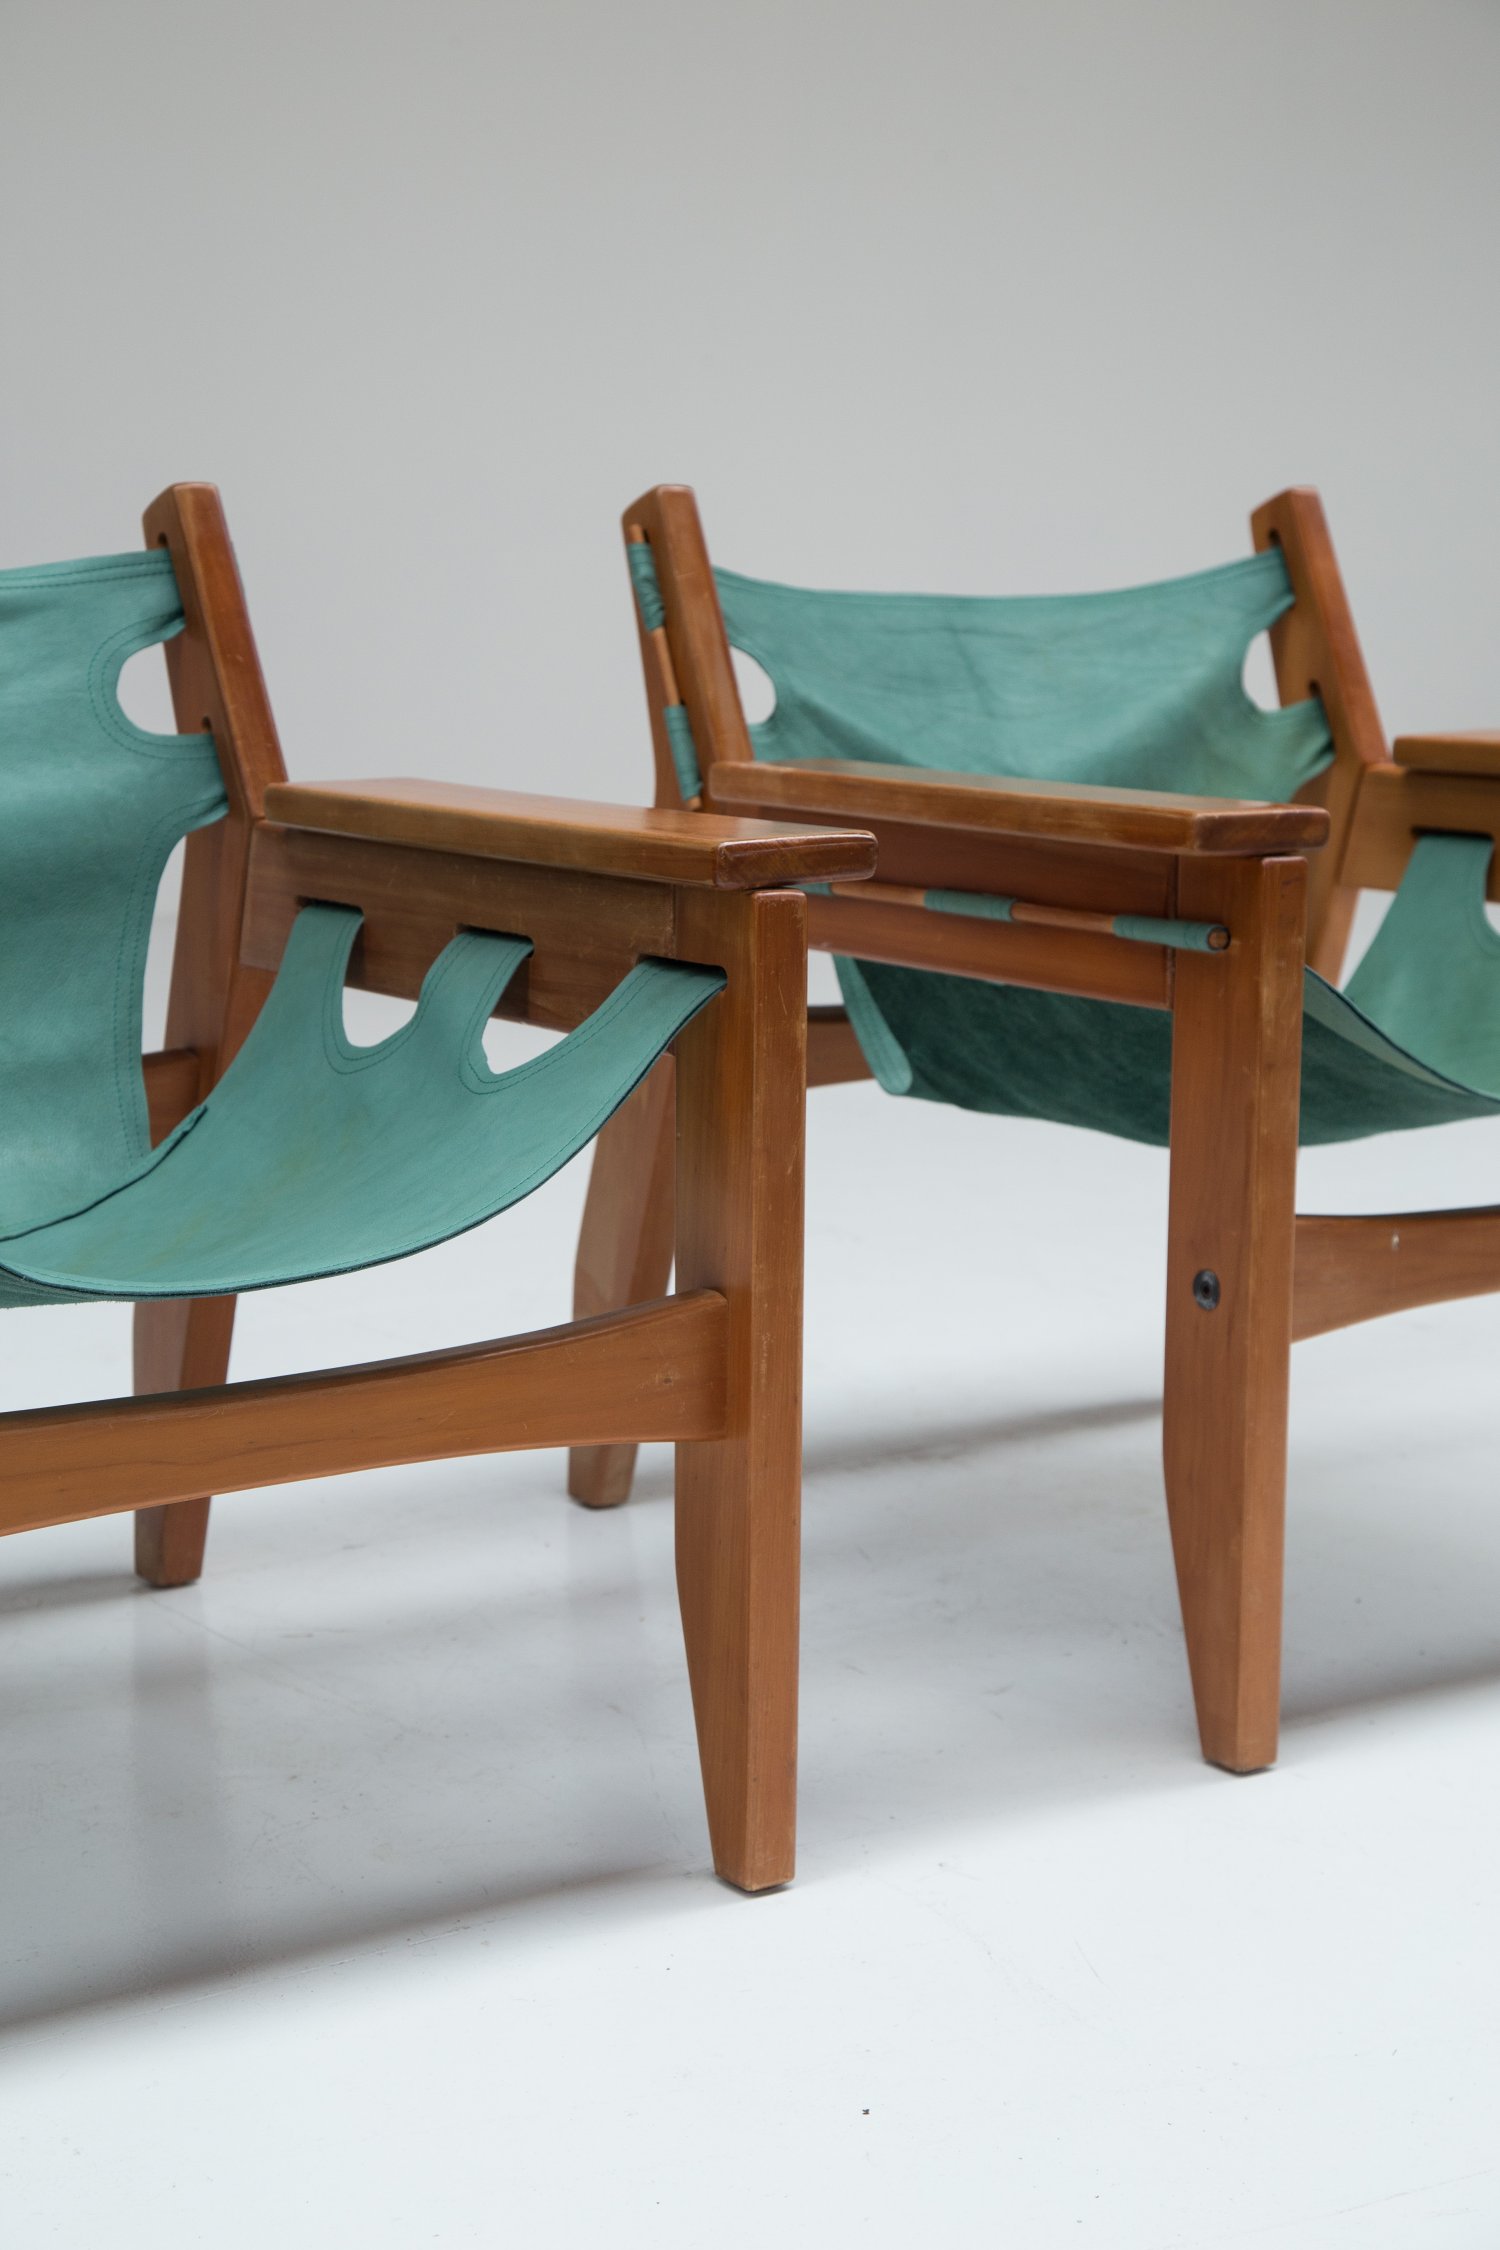 Pair of Sergio Rodrigues 'Killin' chairs